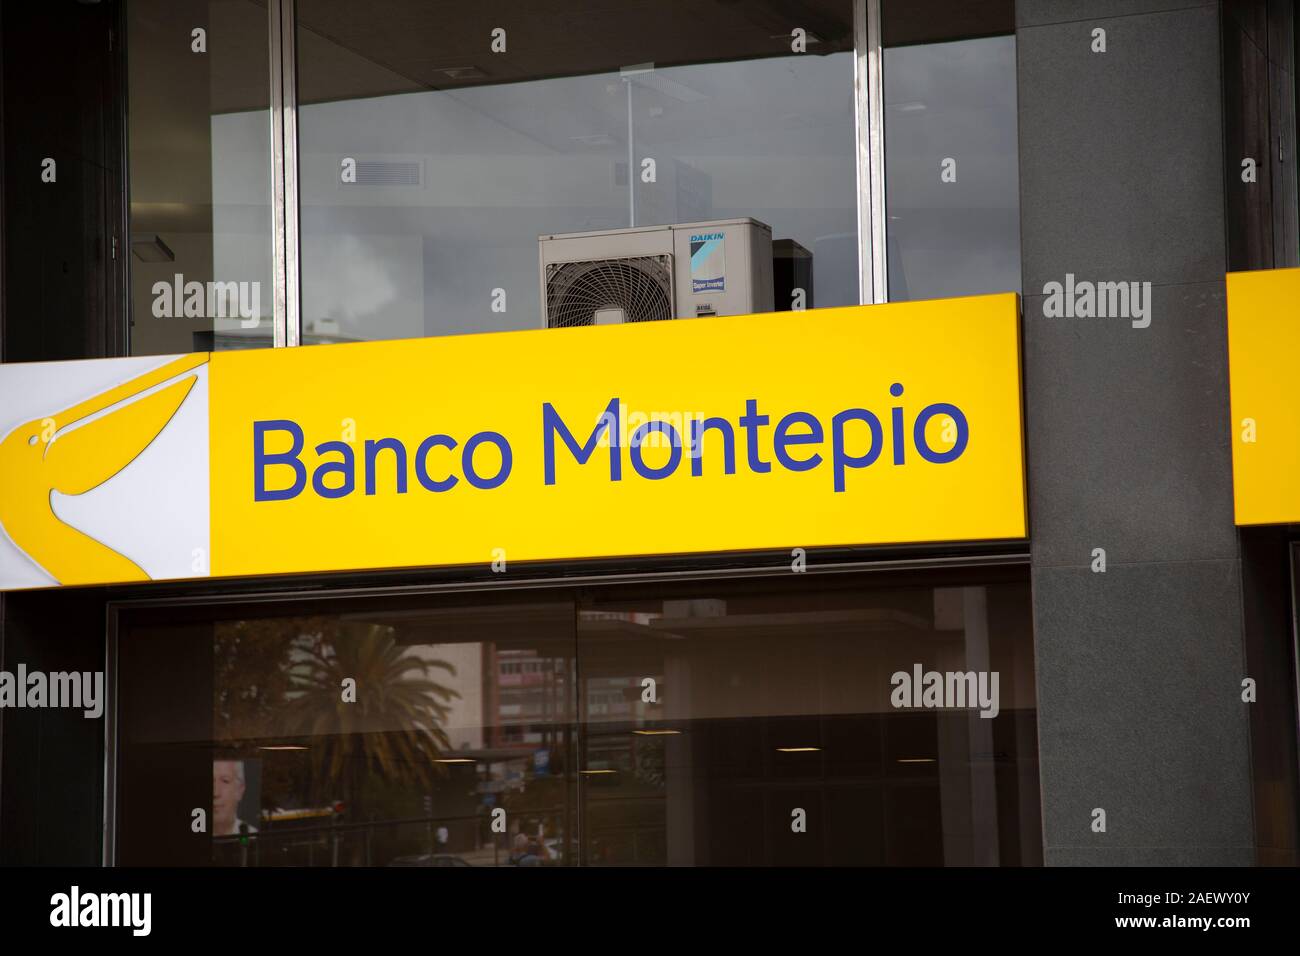 Banco Montepio Sign in LIsbon, Portugal Stock Photo